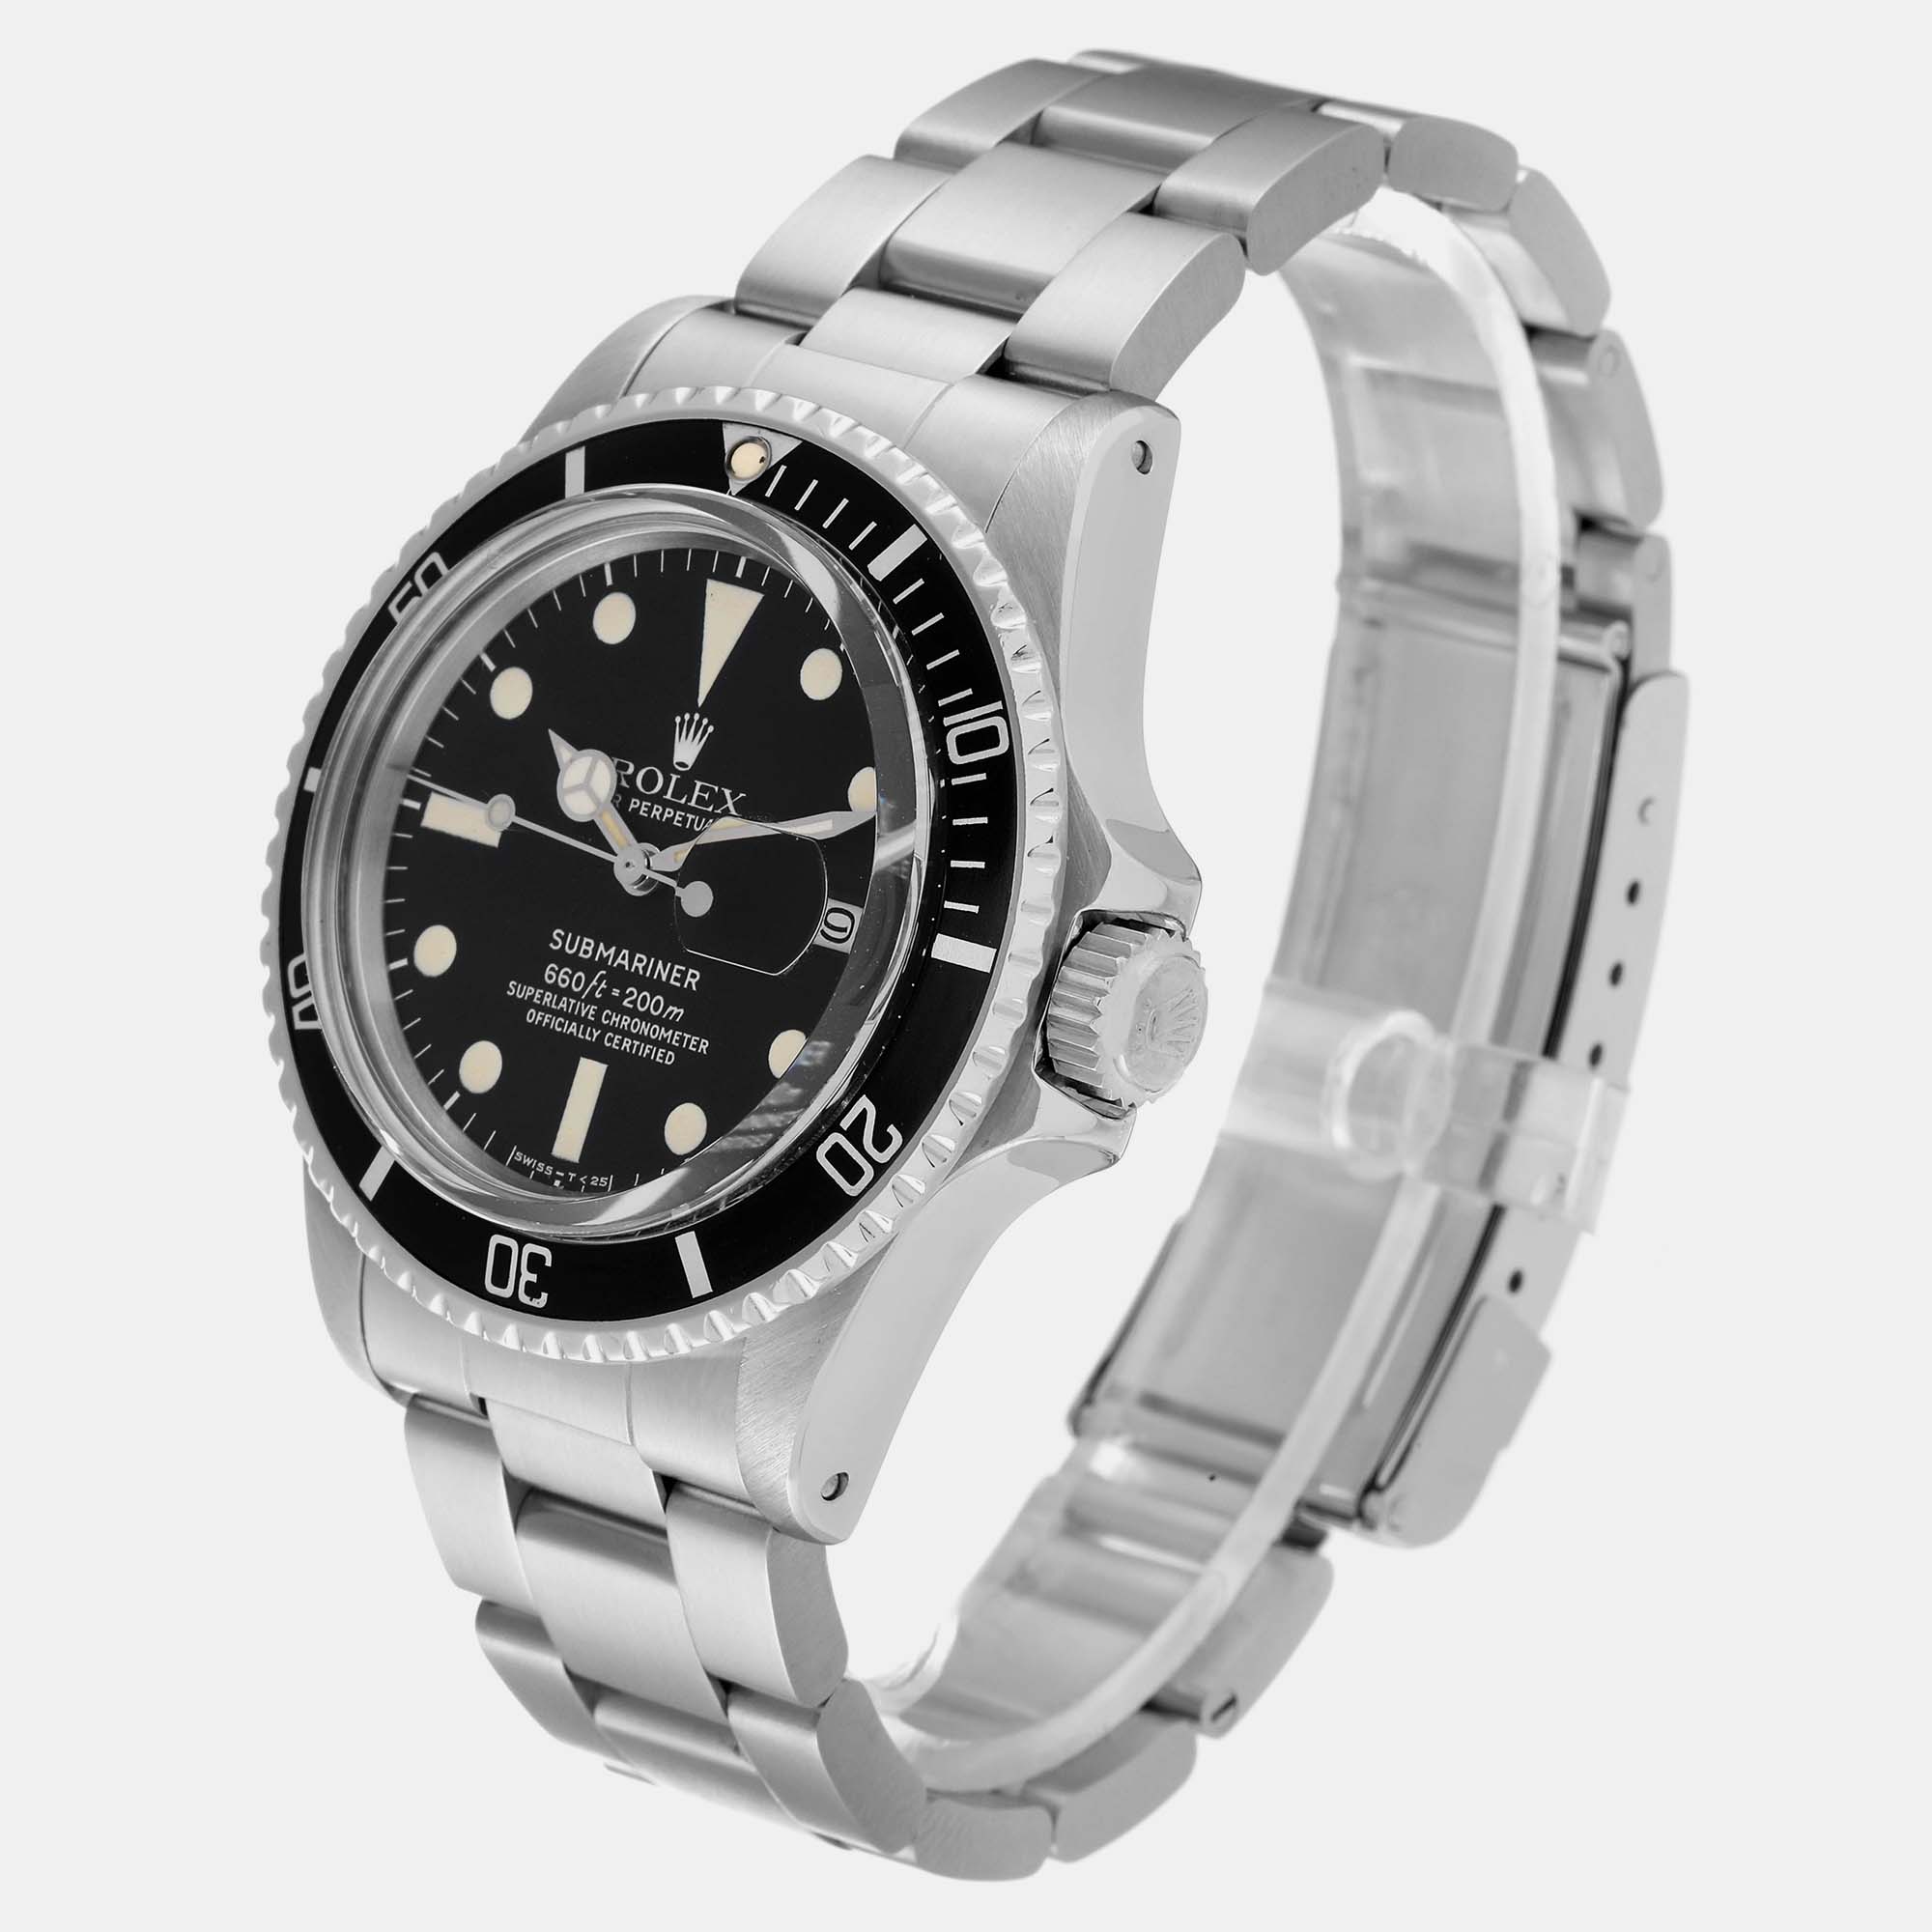 Rolex Submariner Date Steel Black Dial Mens Vintage Watch 1680